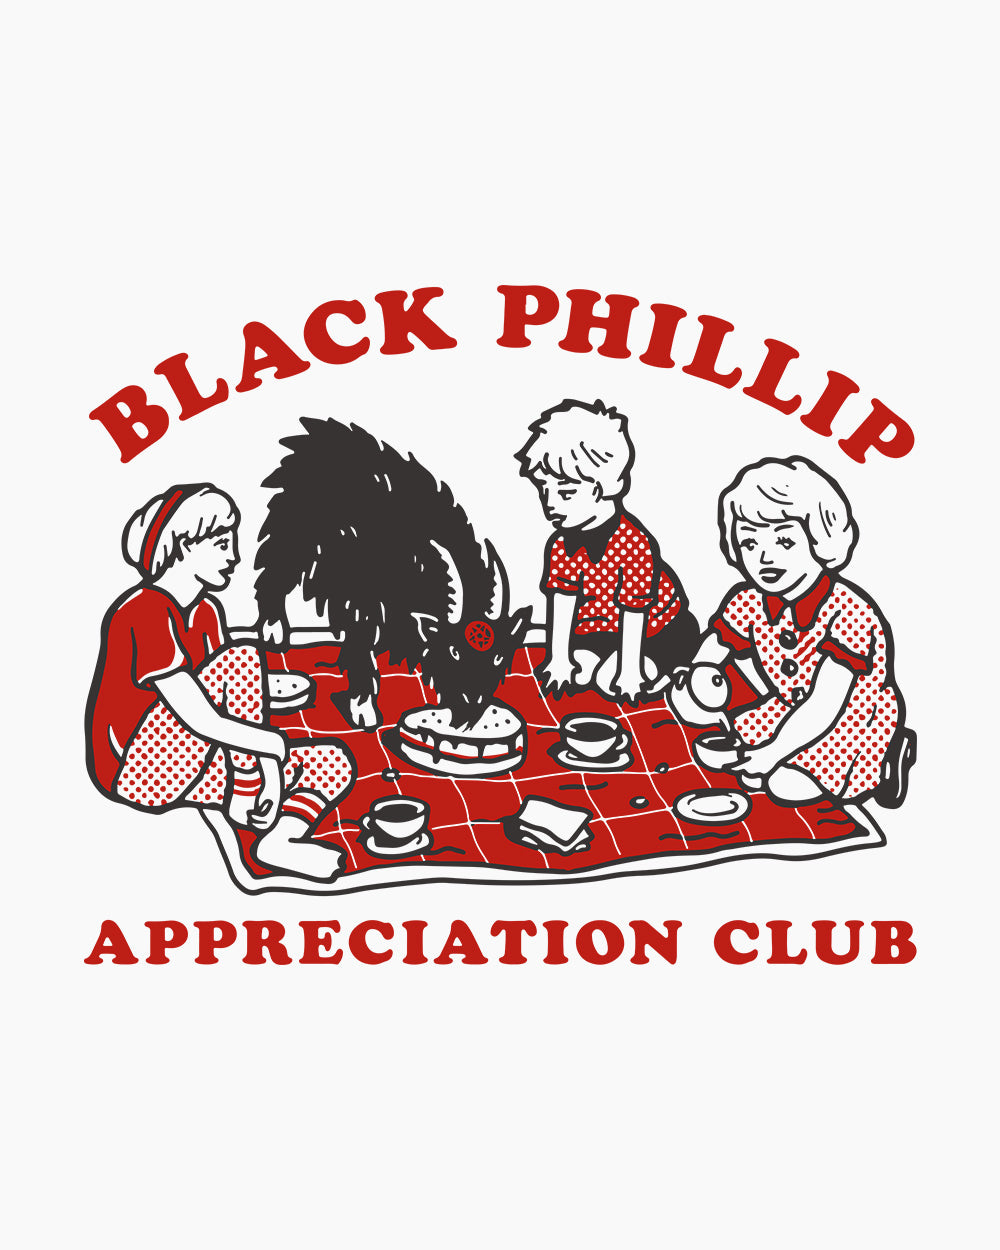 Black Phillip Appreciation Club Hoodie Europe Online #colour_white